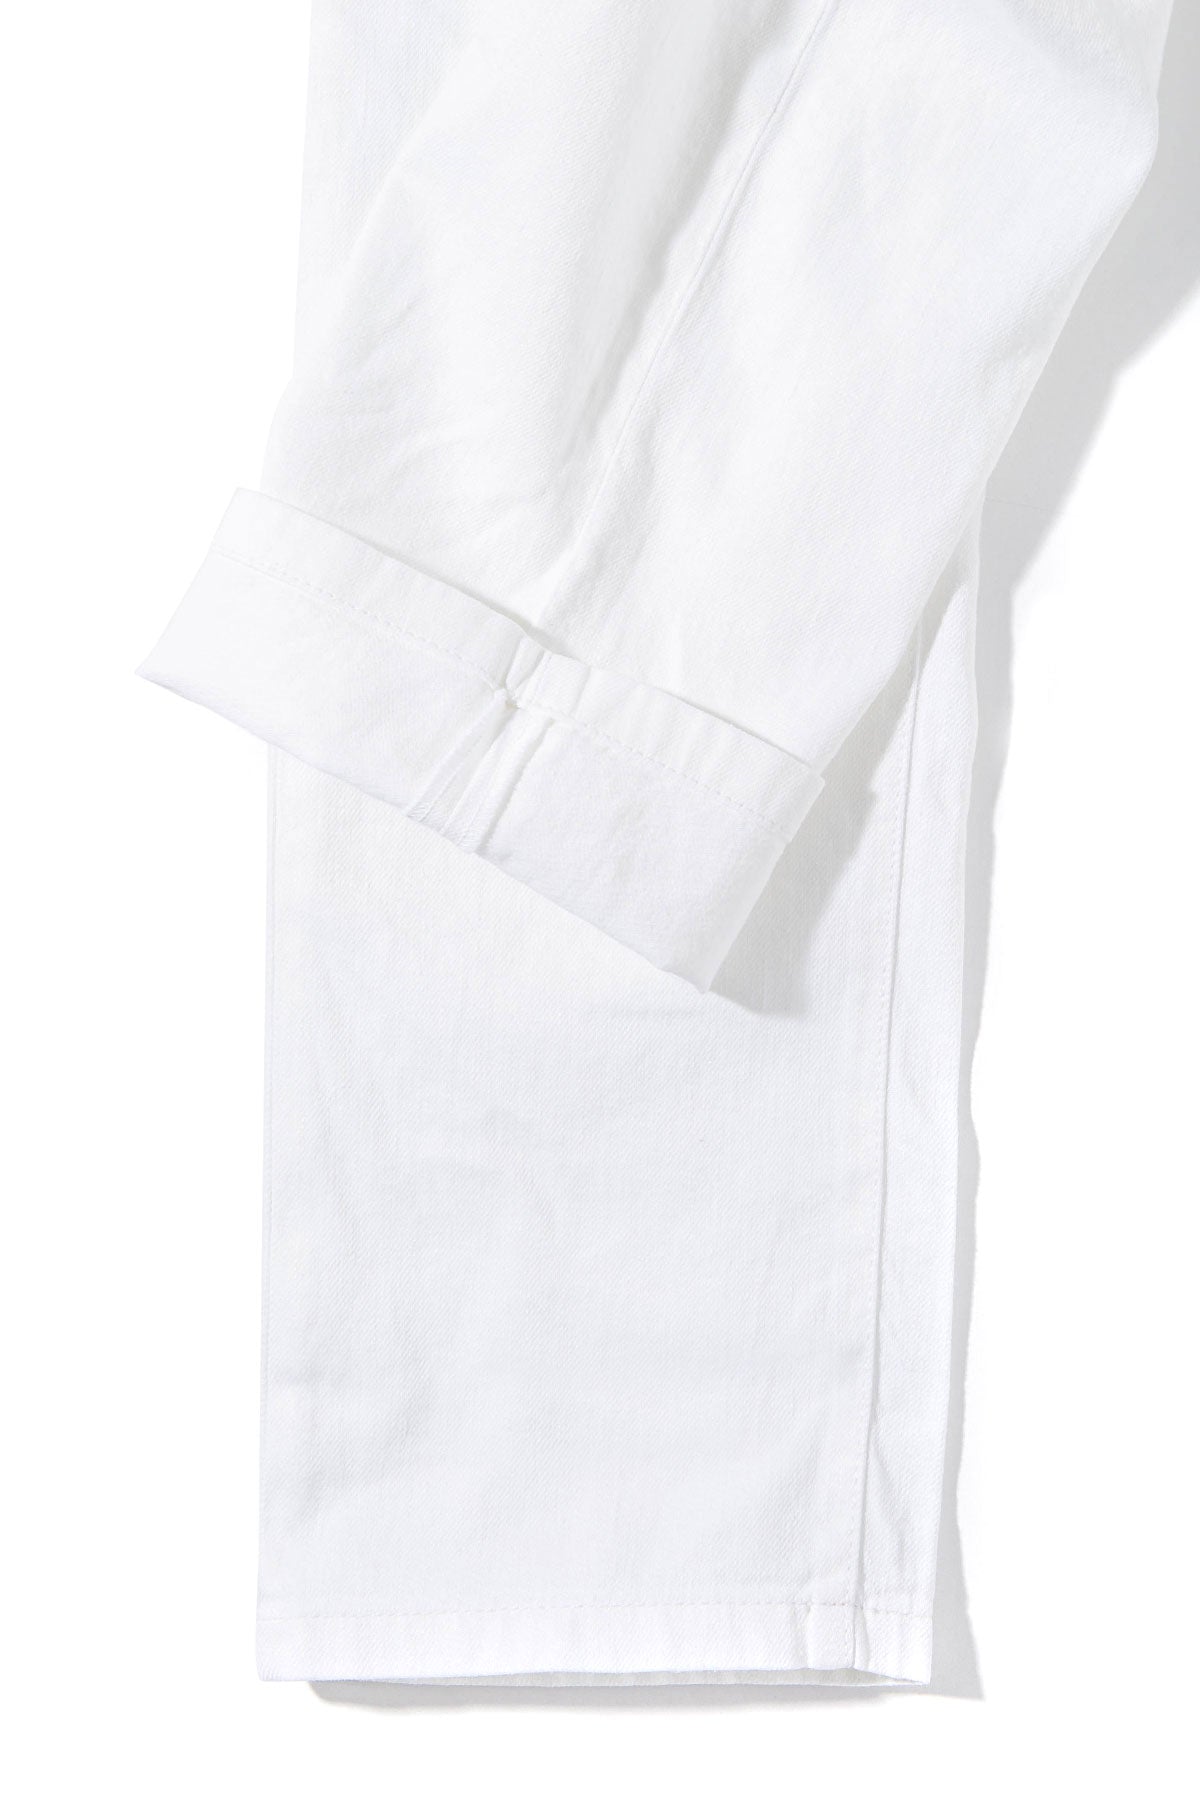 Nevis 5 Pocket Cotton/Linen Stretch | Mens - Pants - 5 Pocket | Teleria Zed